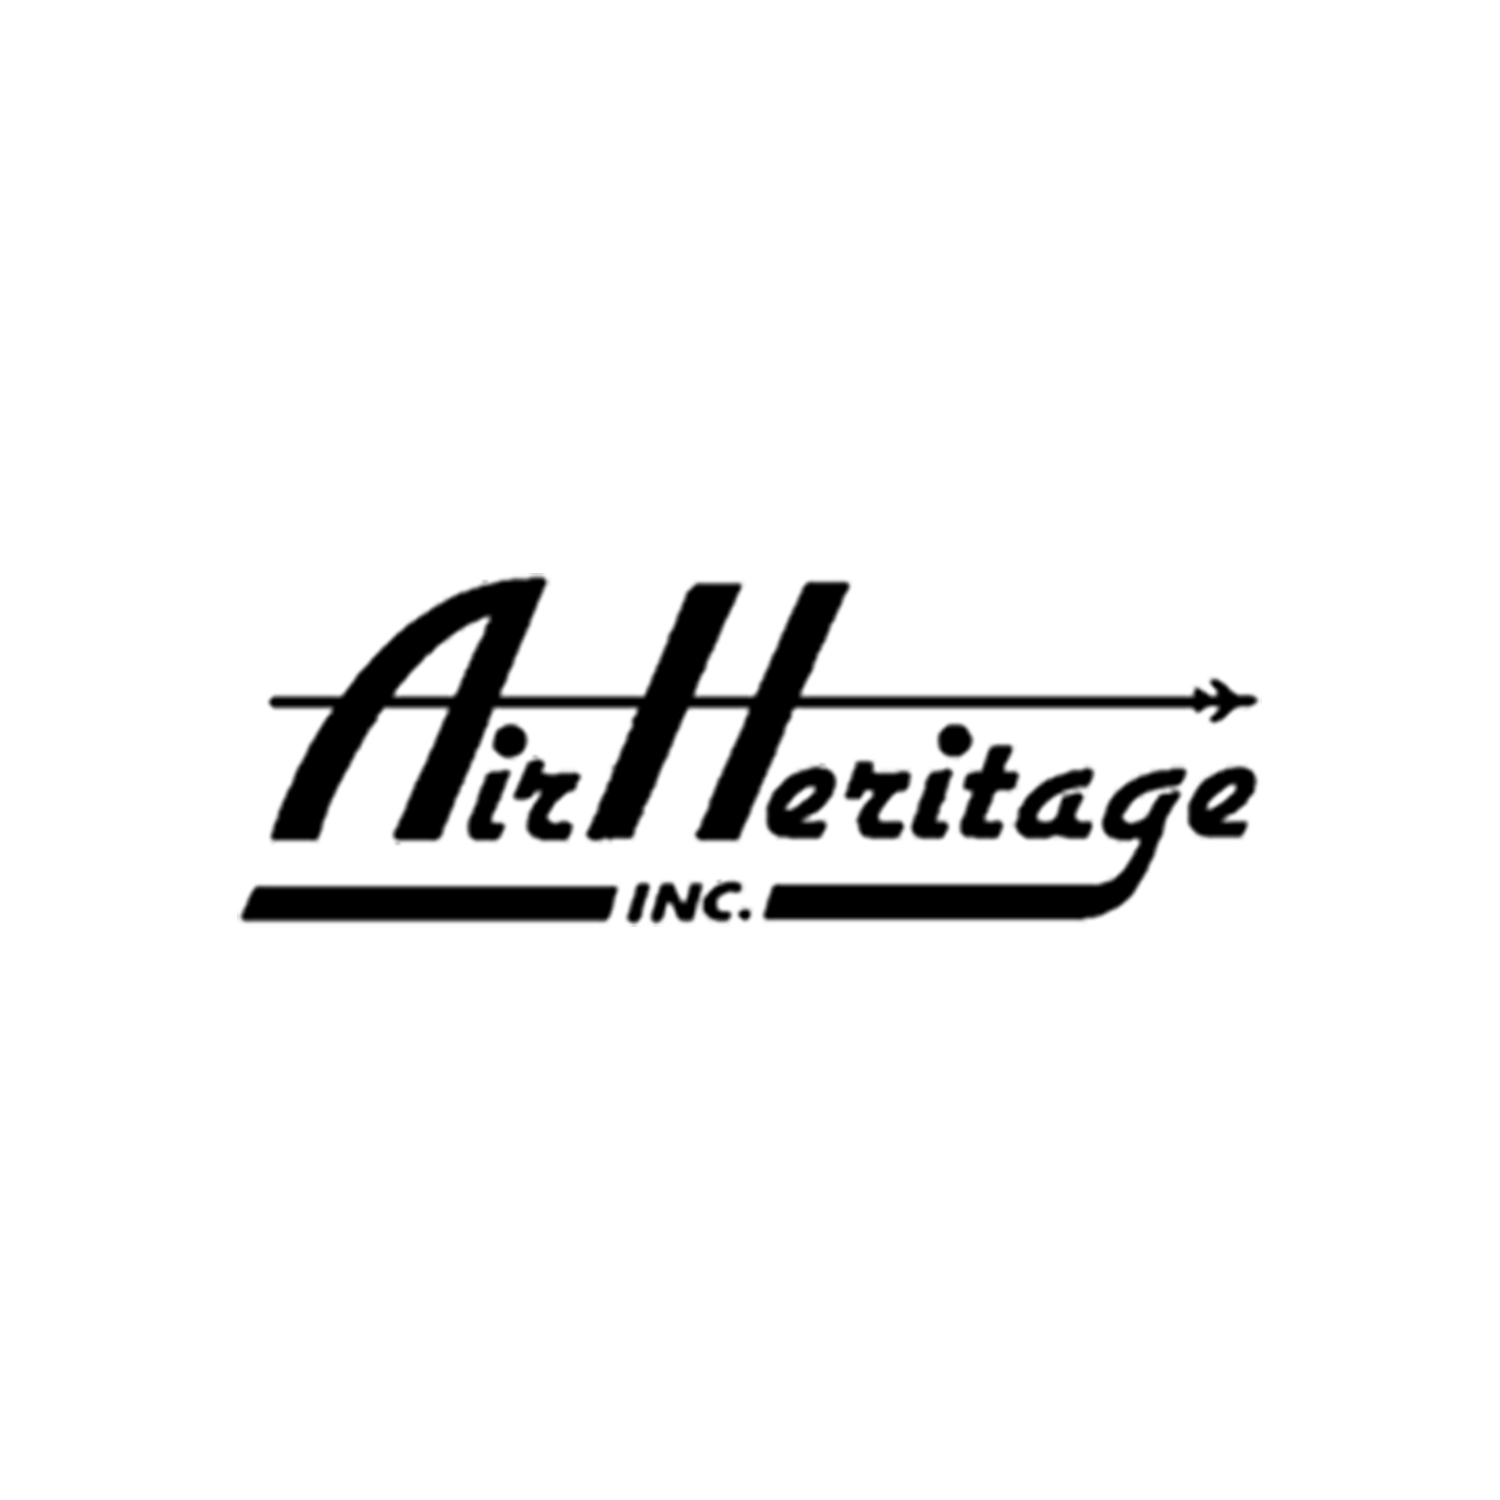 Air Heritage Logo.png